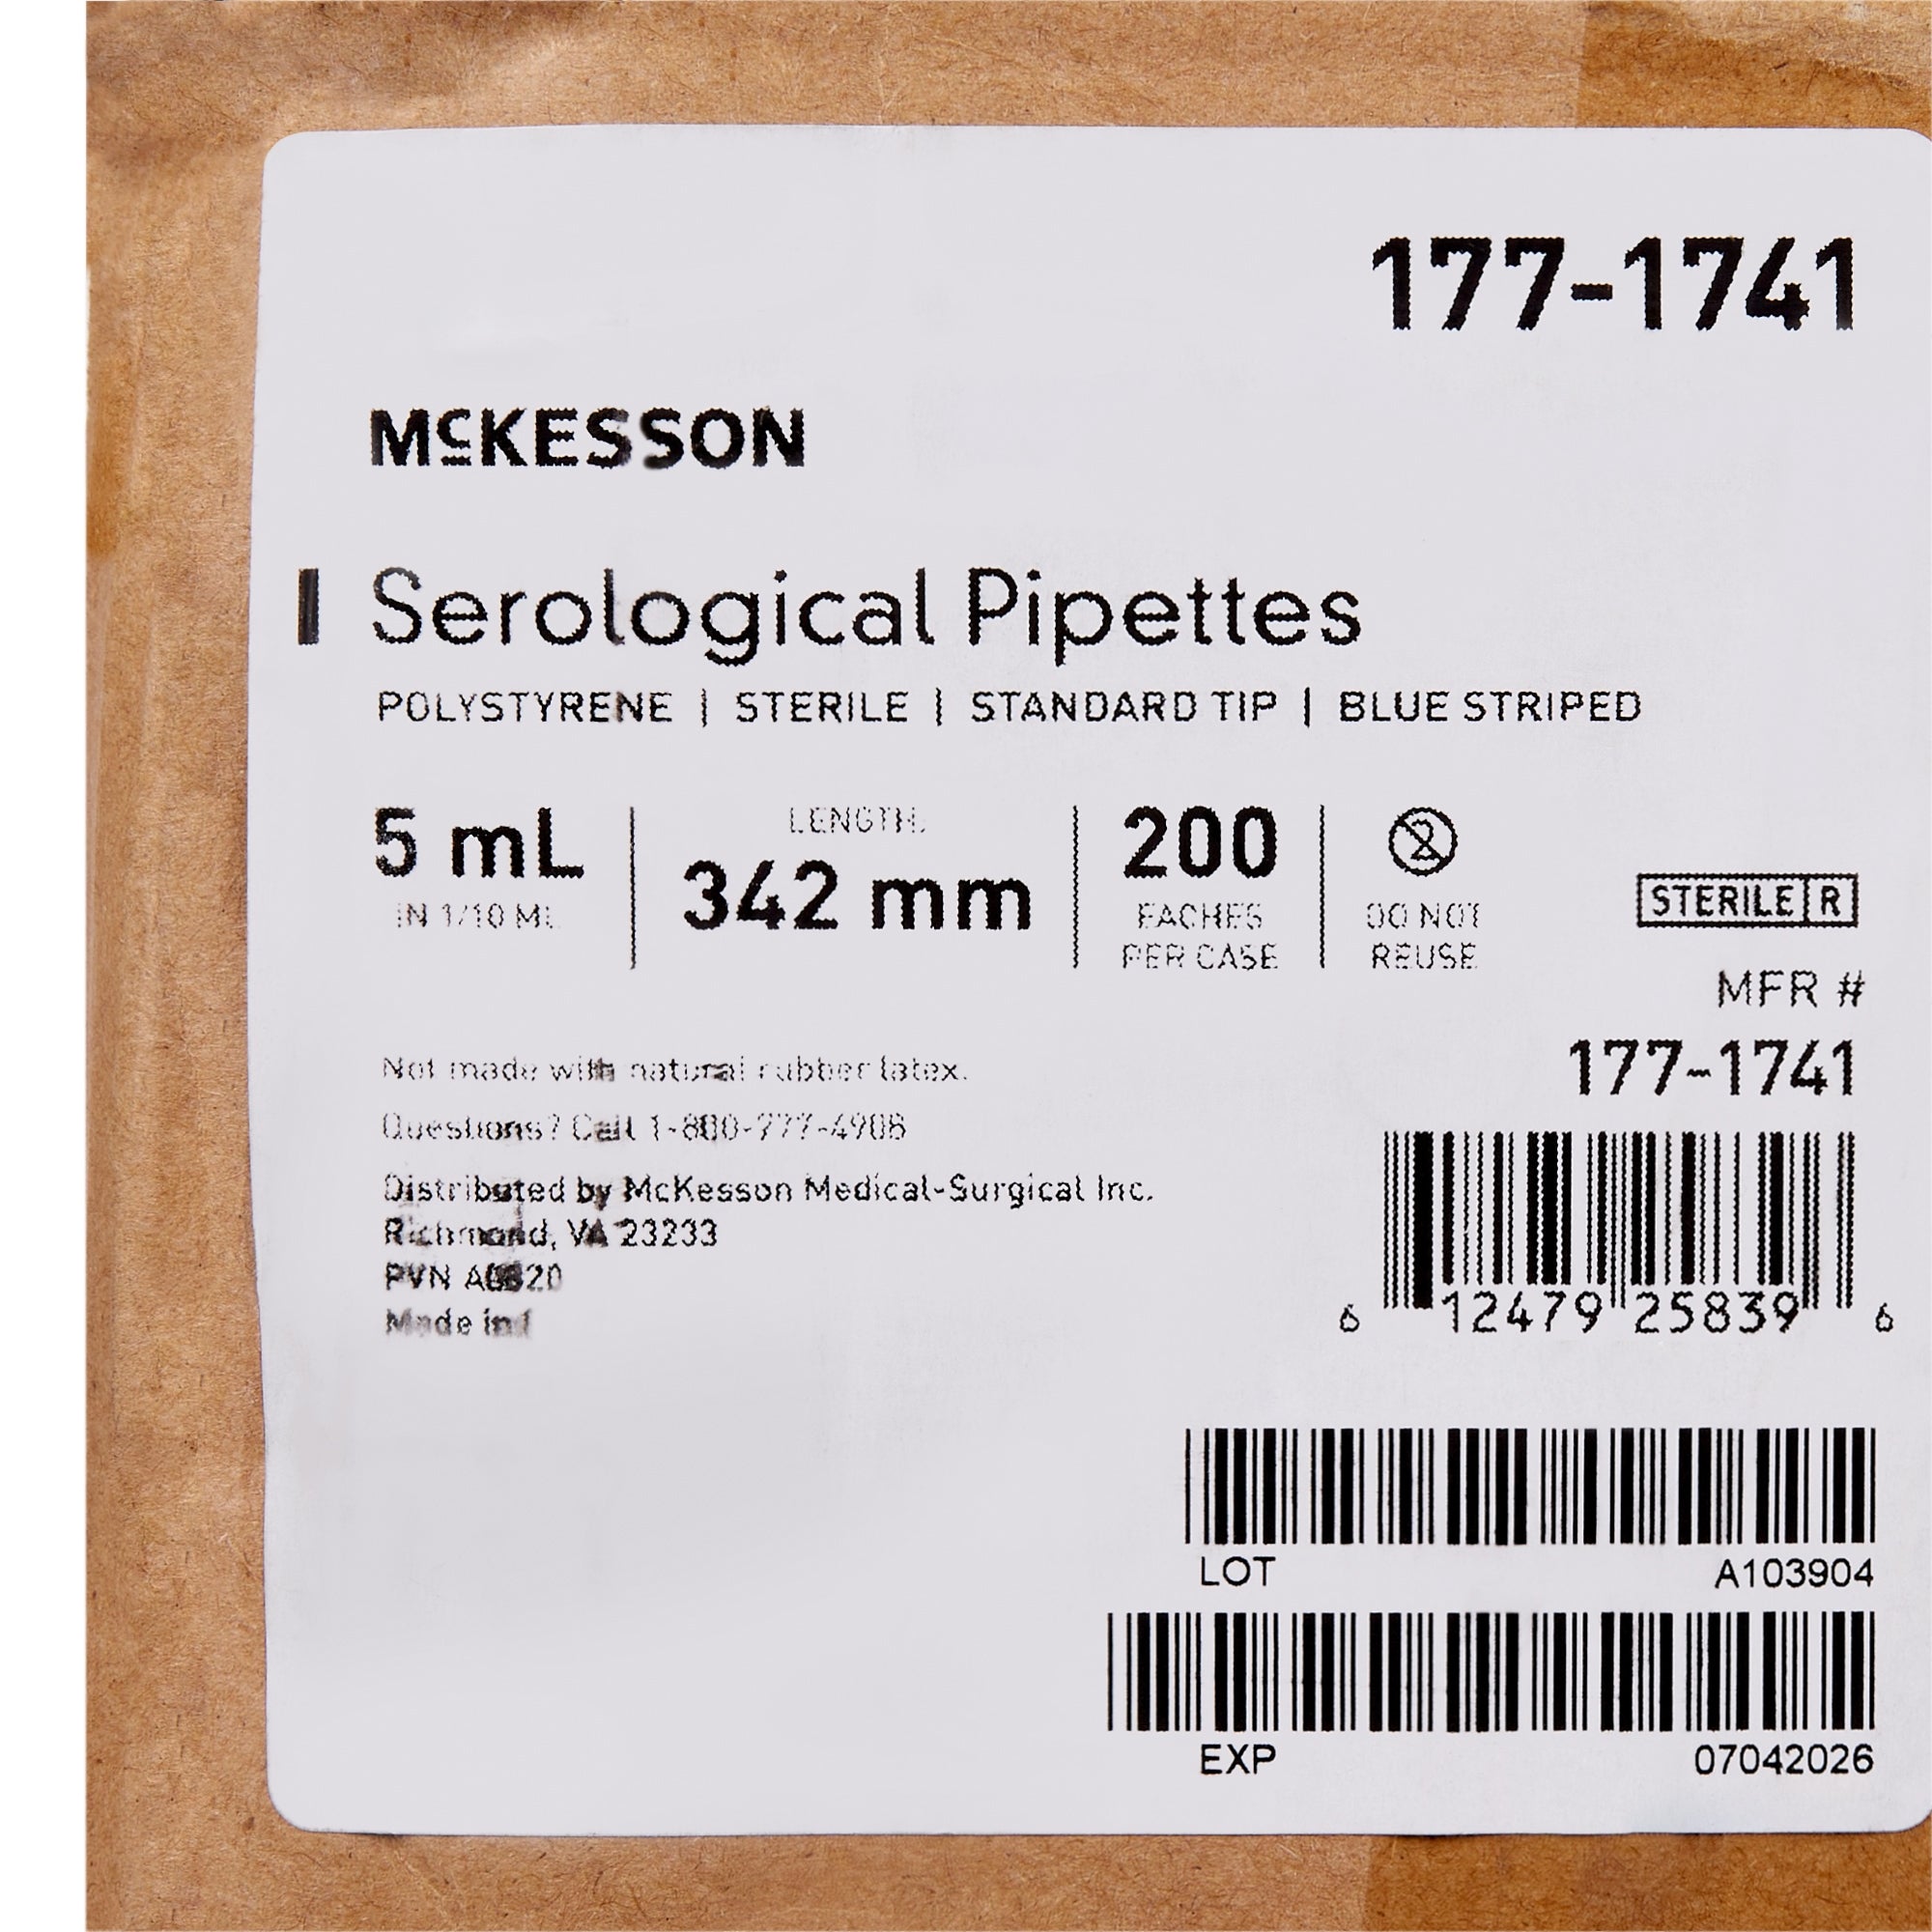 McKesson Serological Pipette 5 mL 0.1 mL Graduation Increments / 2.5 mL Negative Graduations Sterile -177-1741